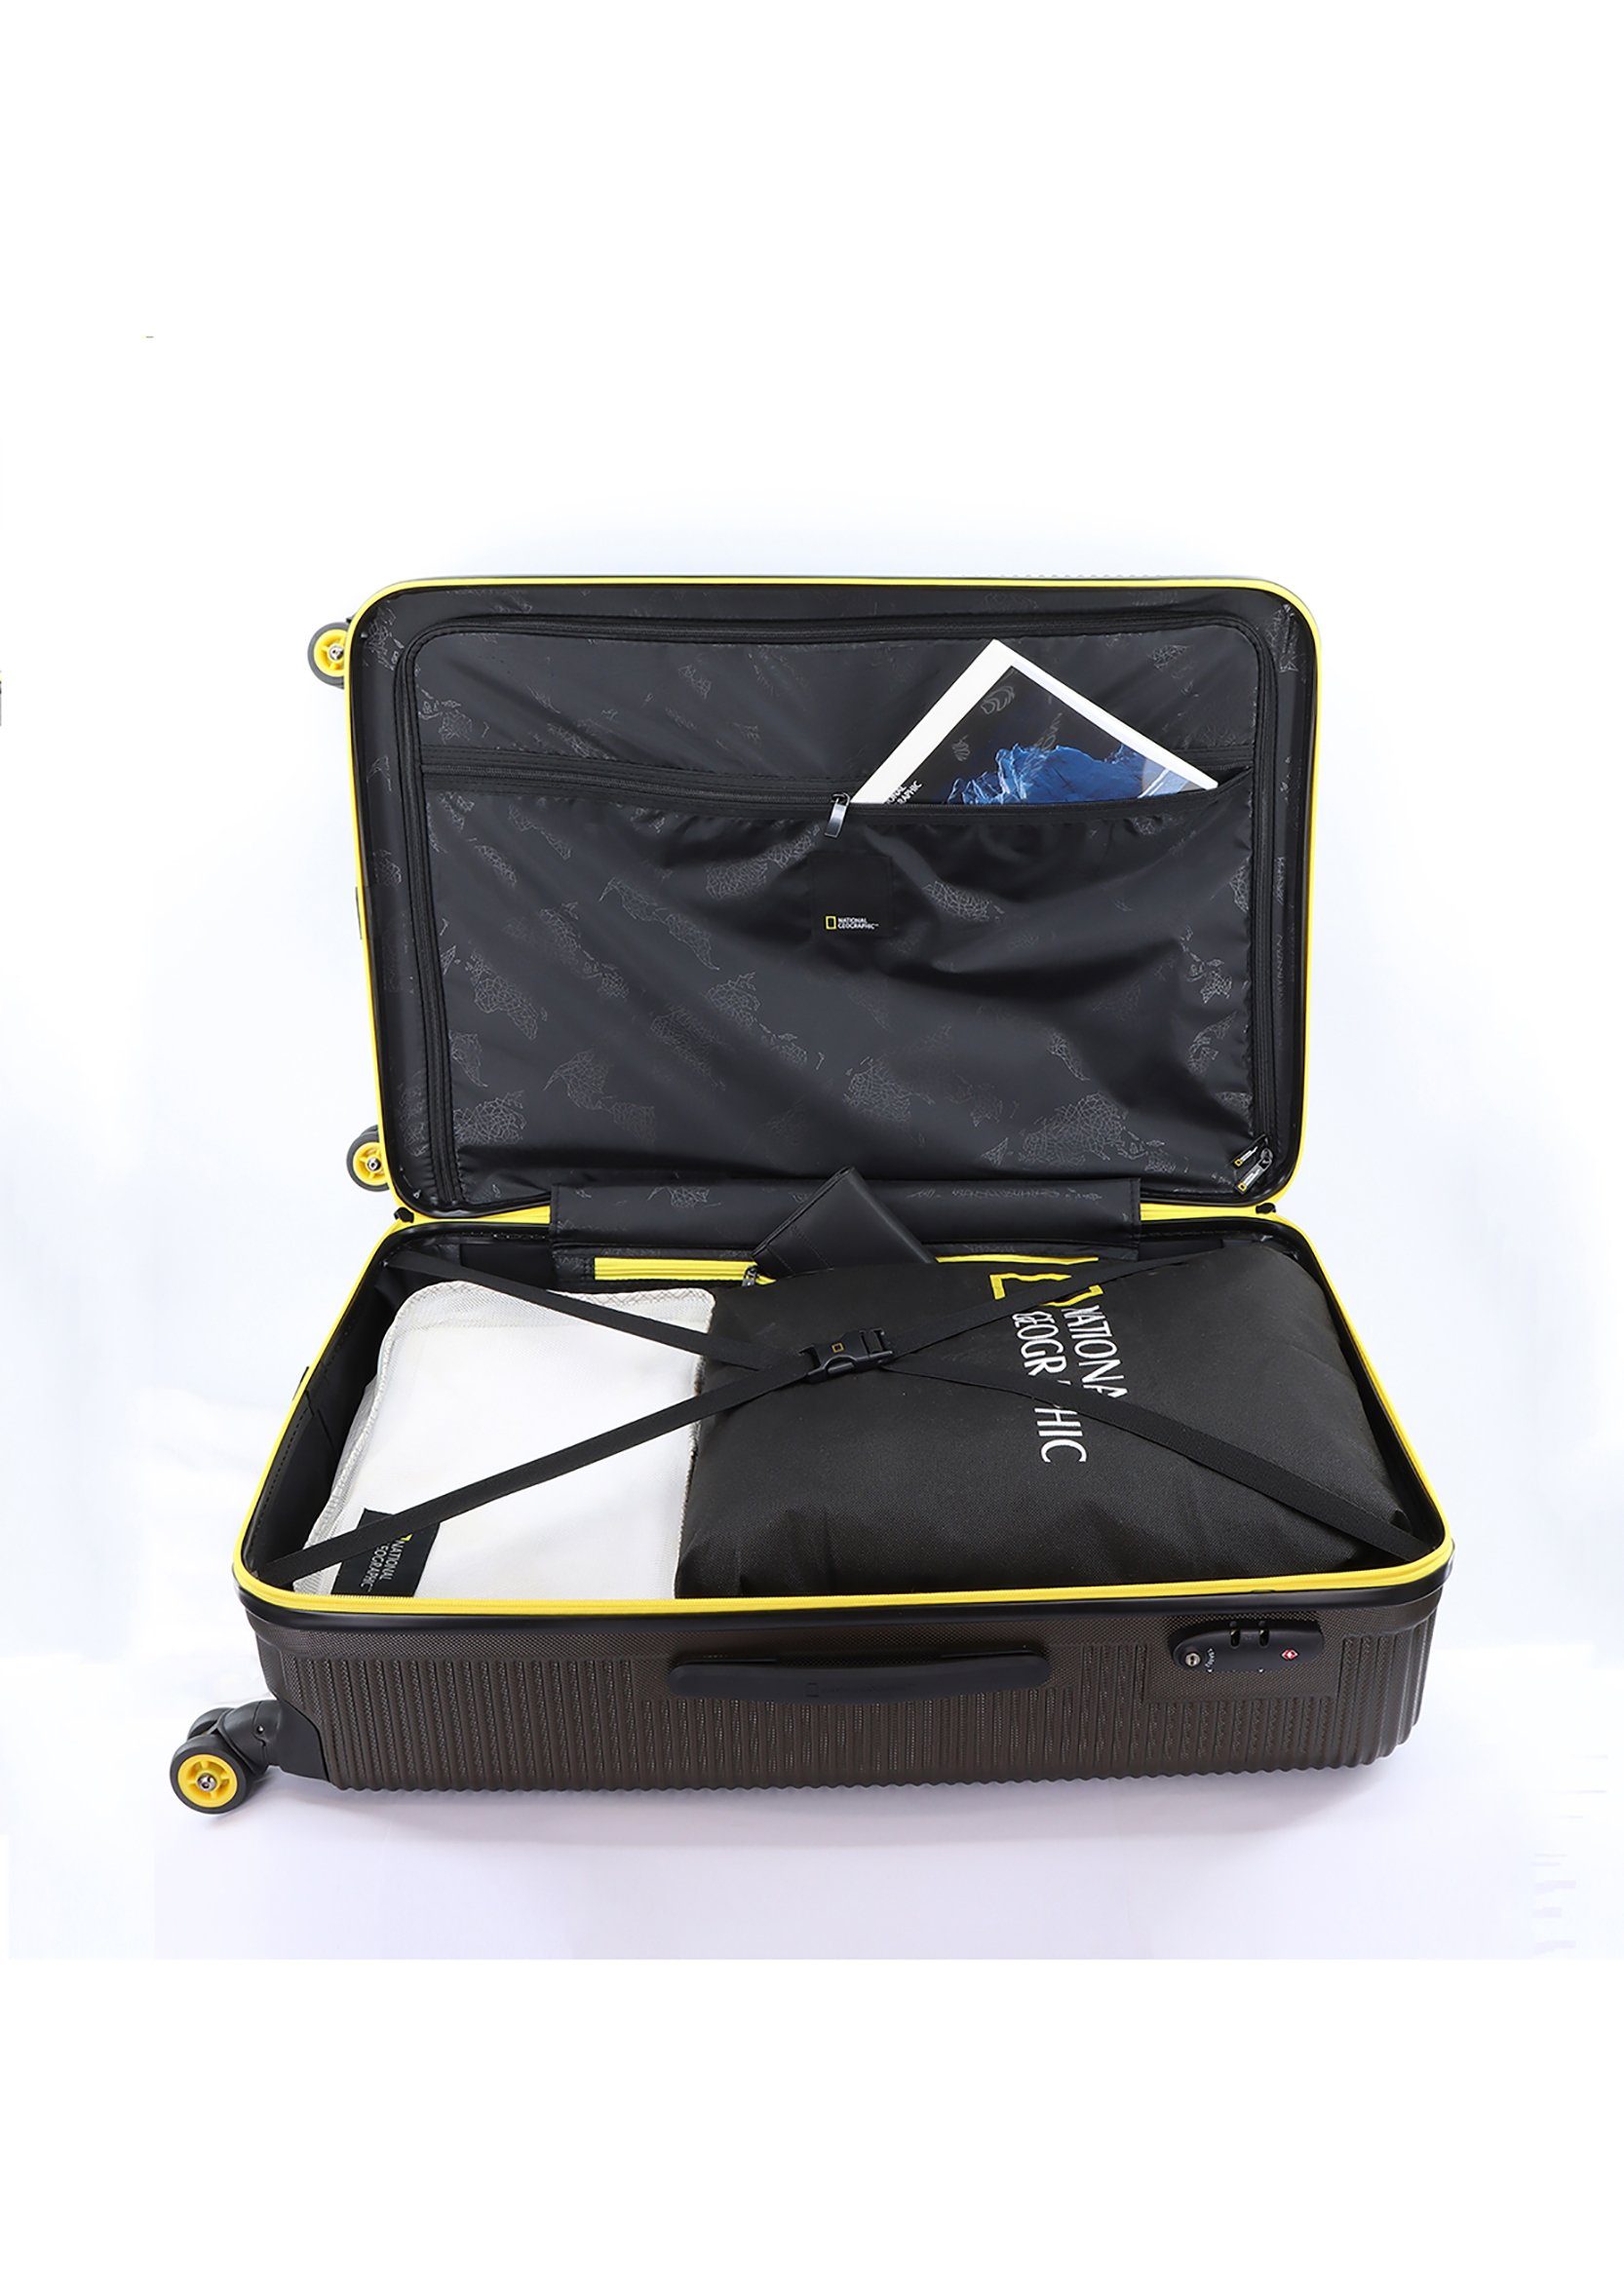 TSA-Zahlenschloss Koffer Abroad, GEOGRAPHIC khaki integriertem mit NATIONAL 11